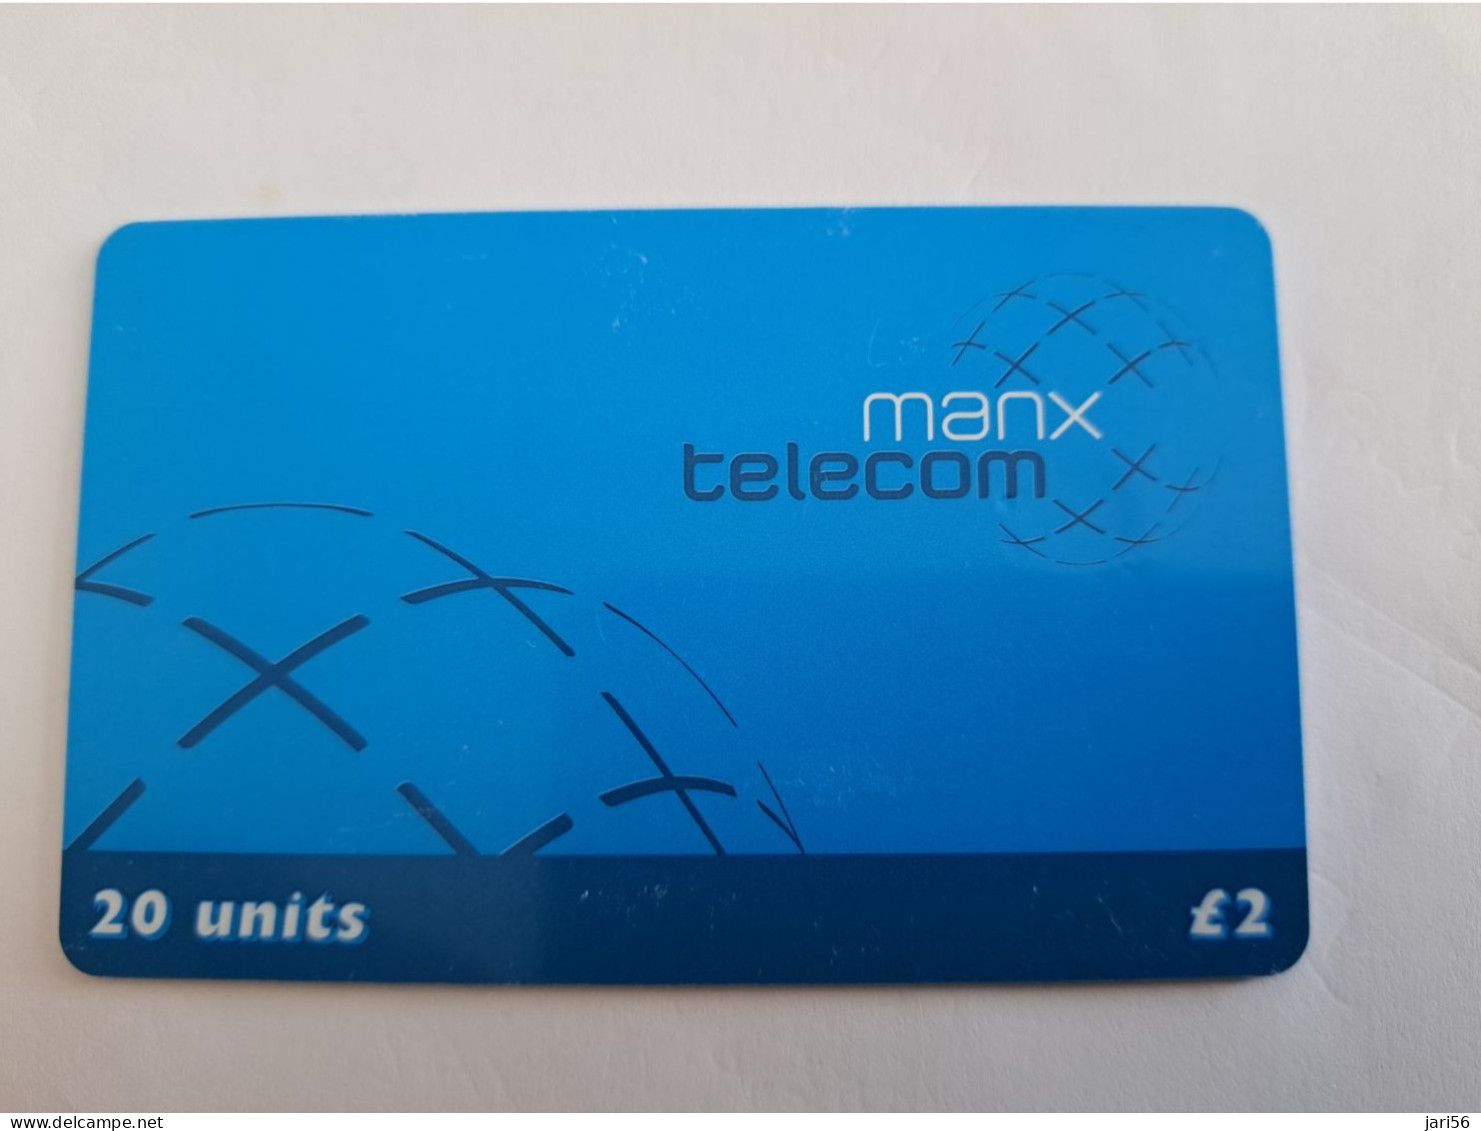 ISLE OF MAN 2 POUND  MANX TELECOM  21 UNITS / MANX TELECOM/ BLUE CARD            CHIP   ** 15104** - Isle Of Man